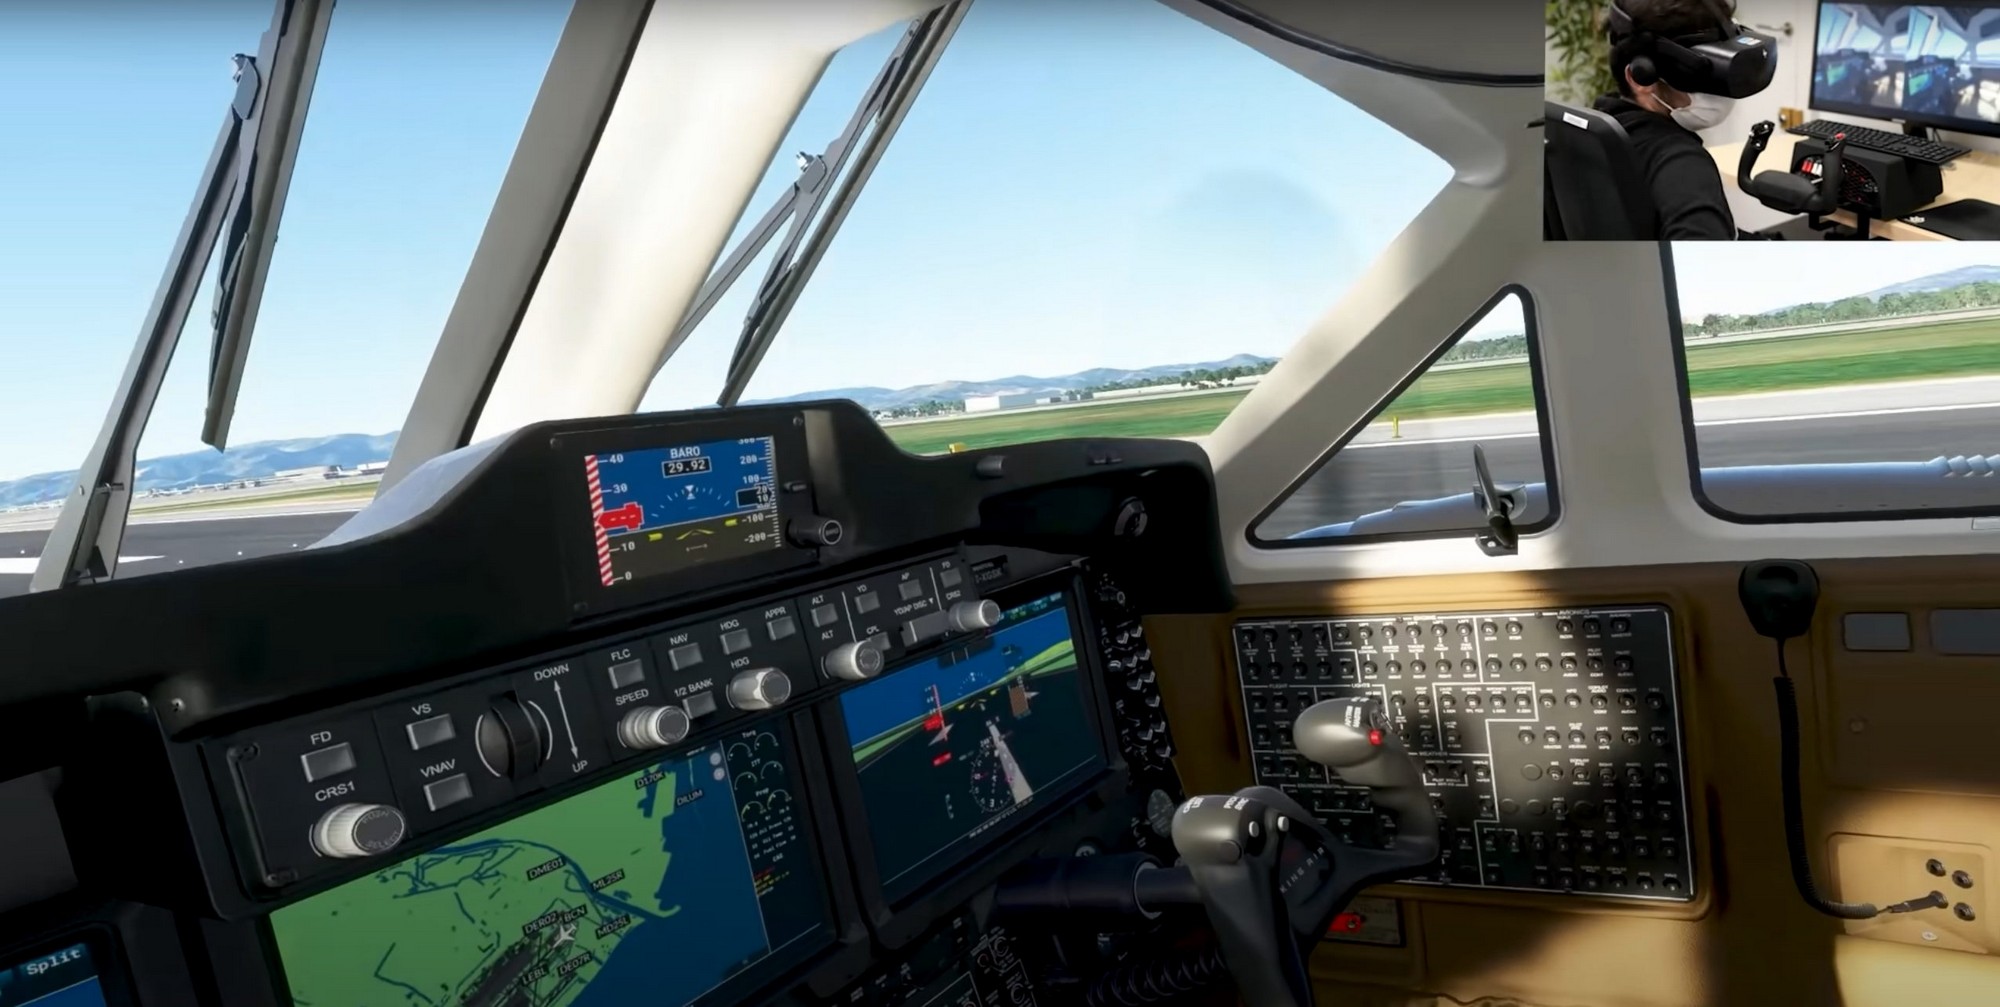 Microsoft Flight Simulator 2020: Now with VR! - Economy Class & Beyond